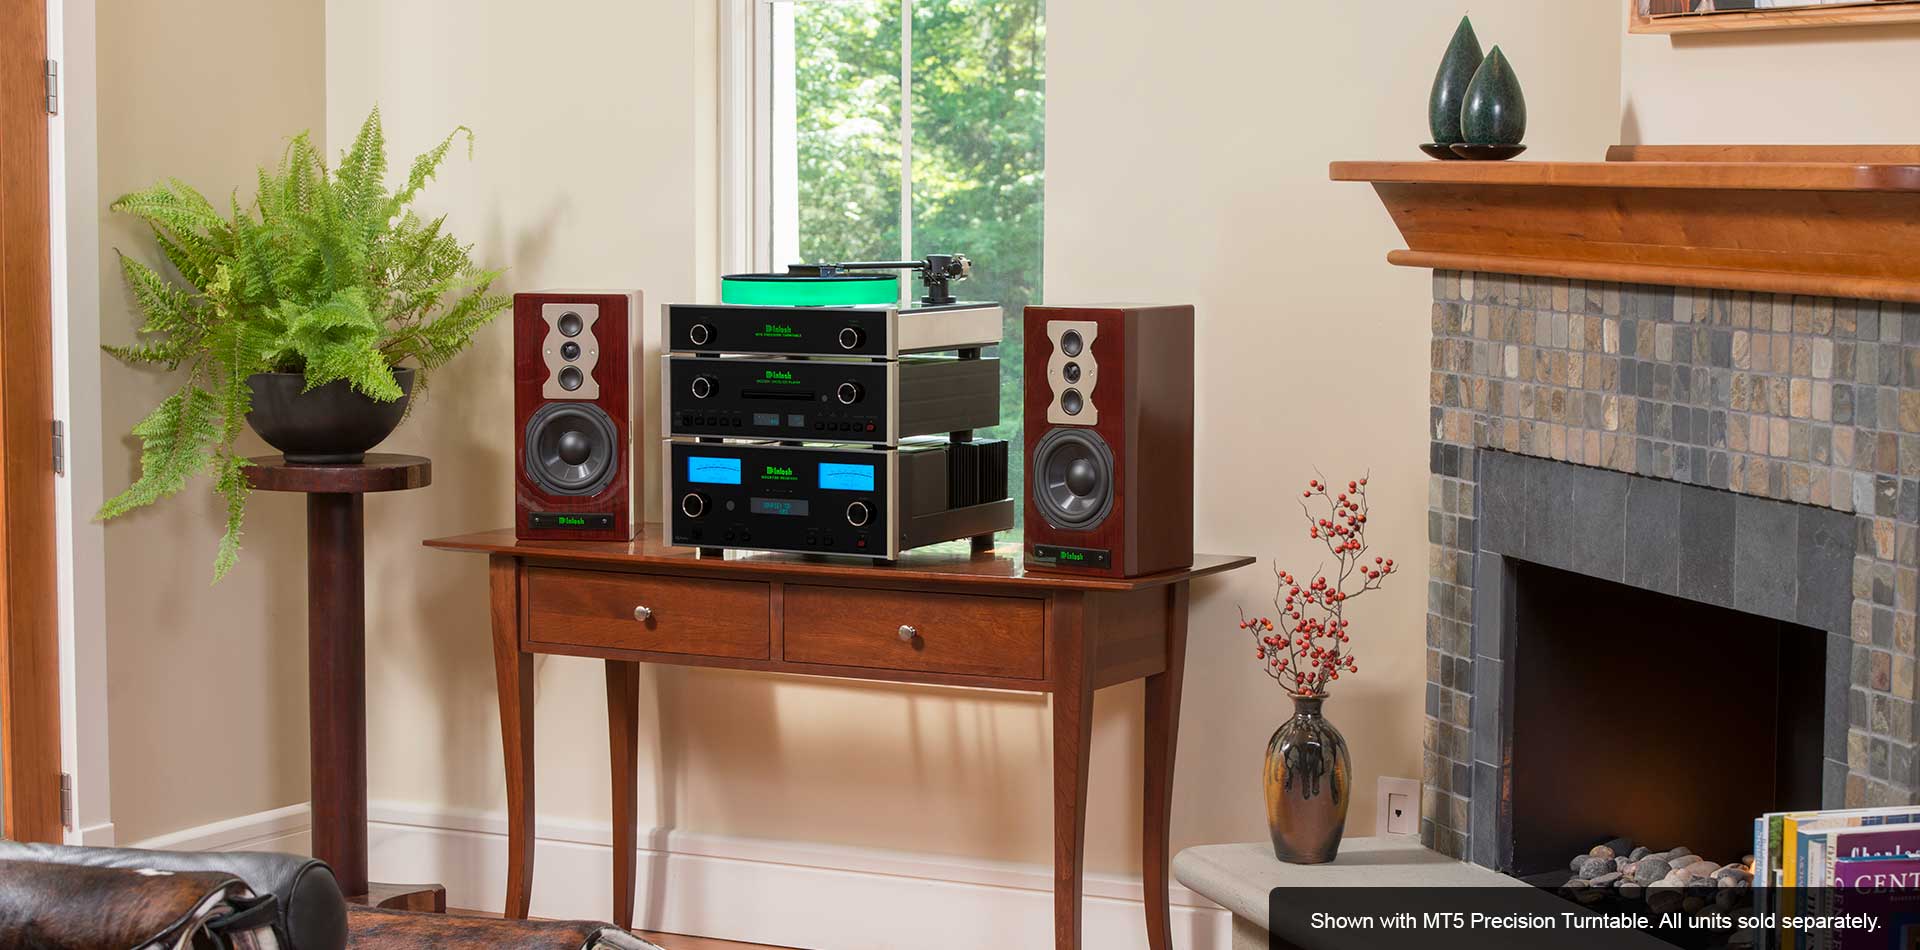 McIntosh SoHo III home audio music system